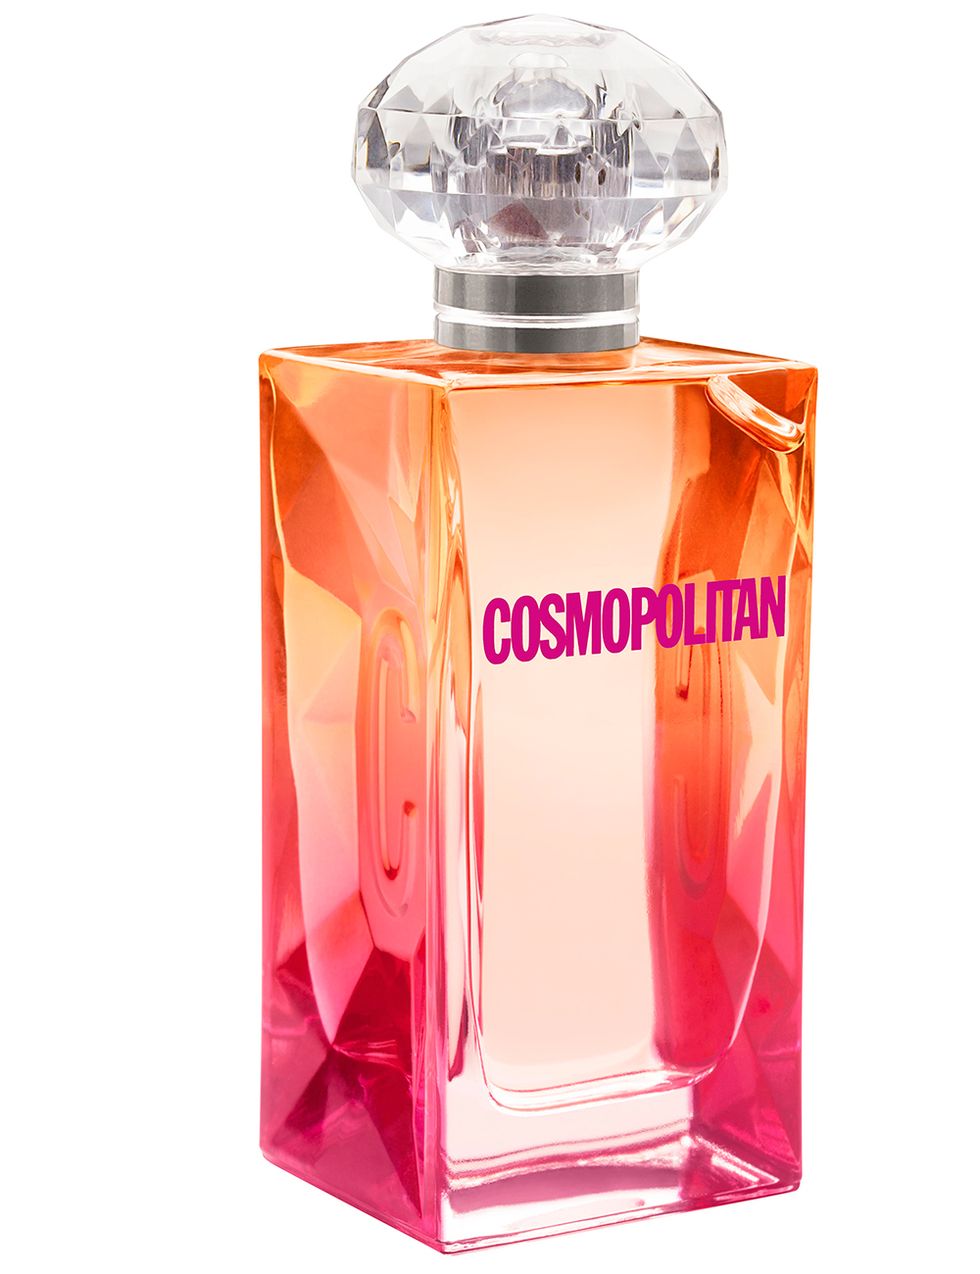 Cosmopolitan The Fragrance